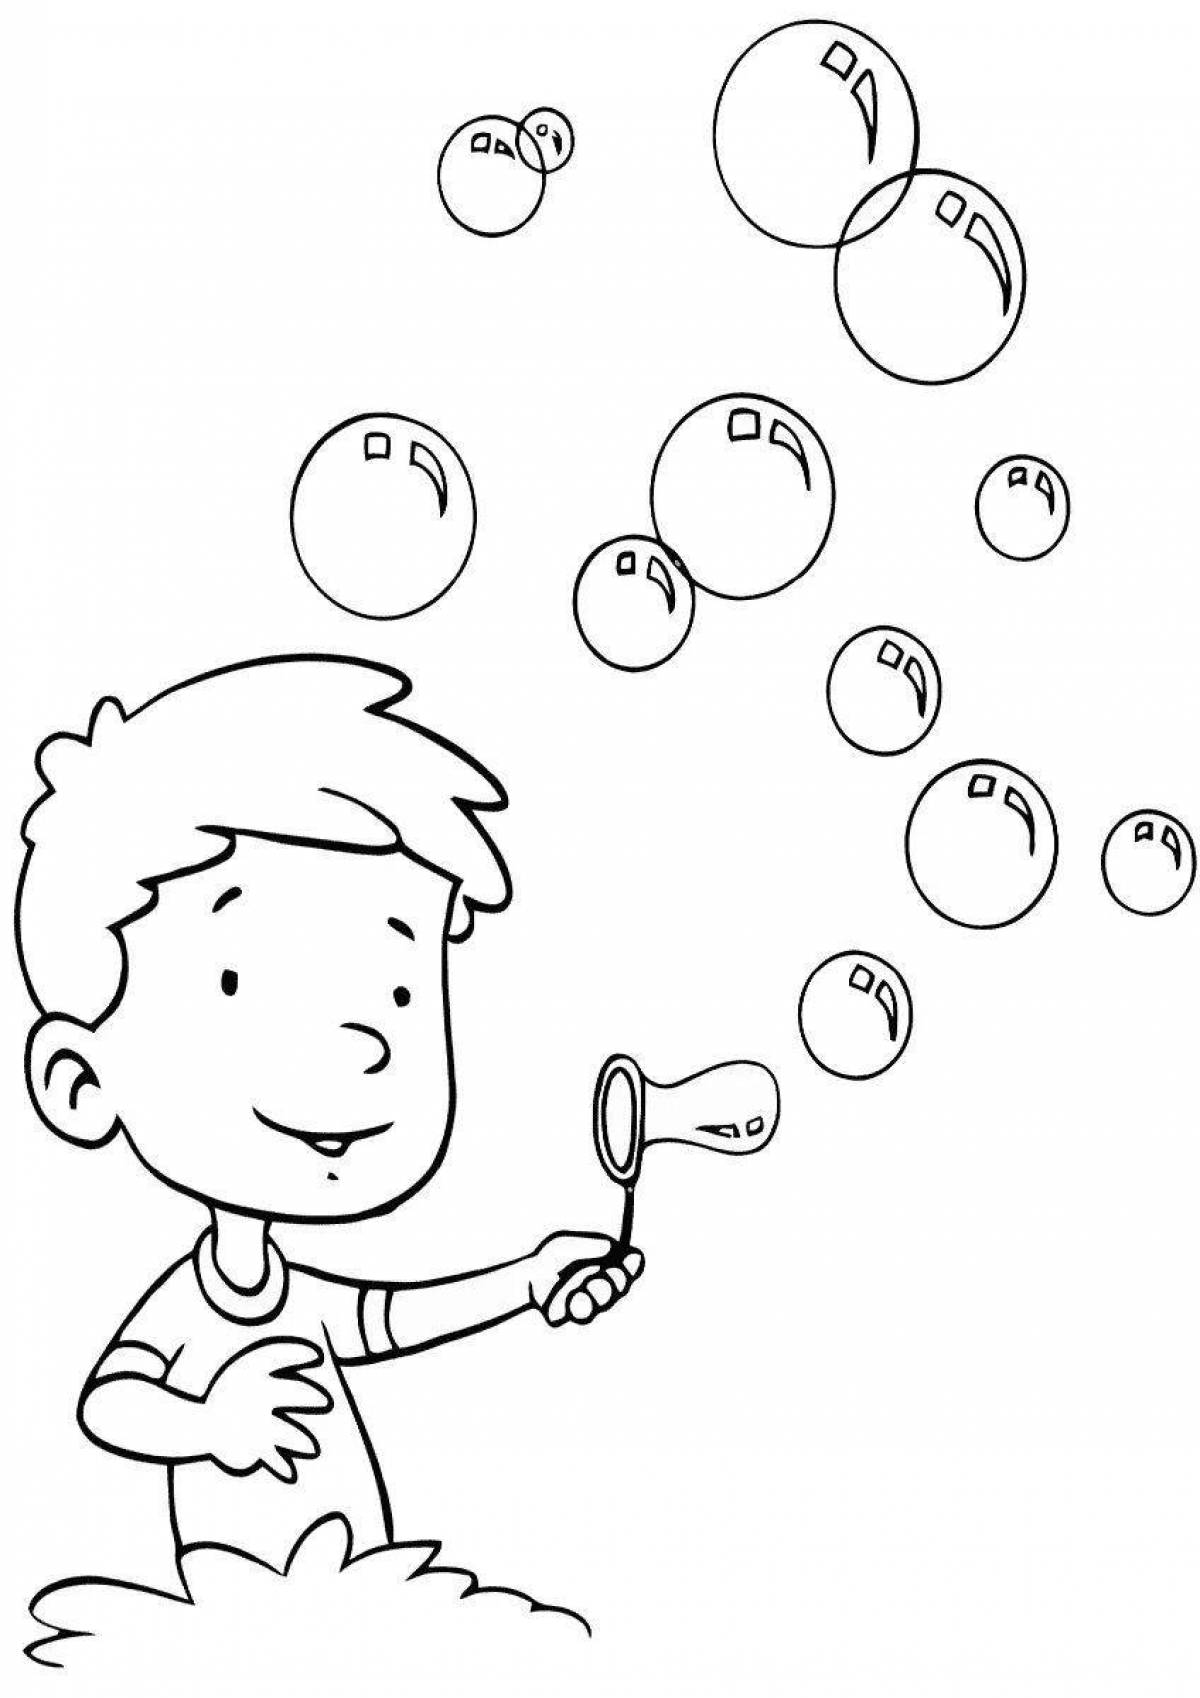 Cute bubble coloring page